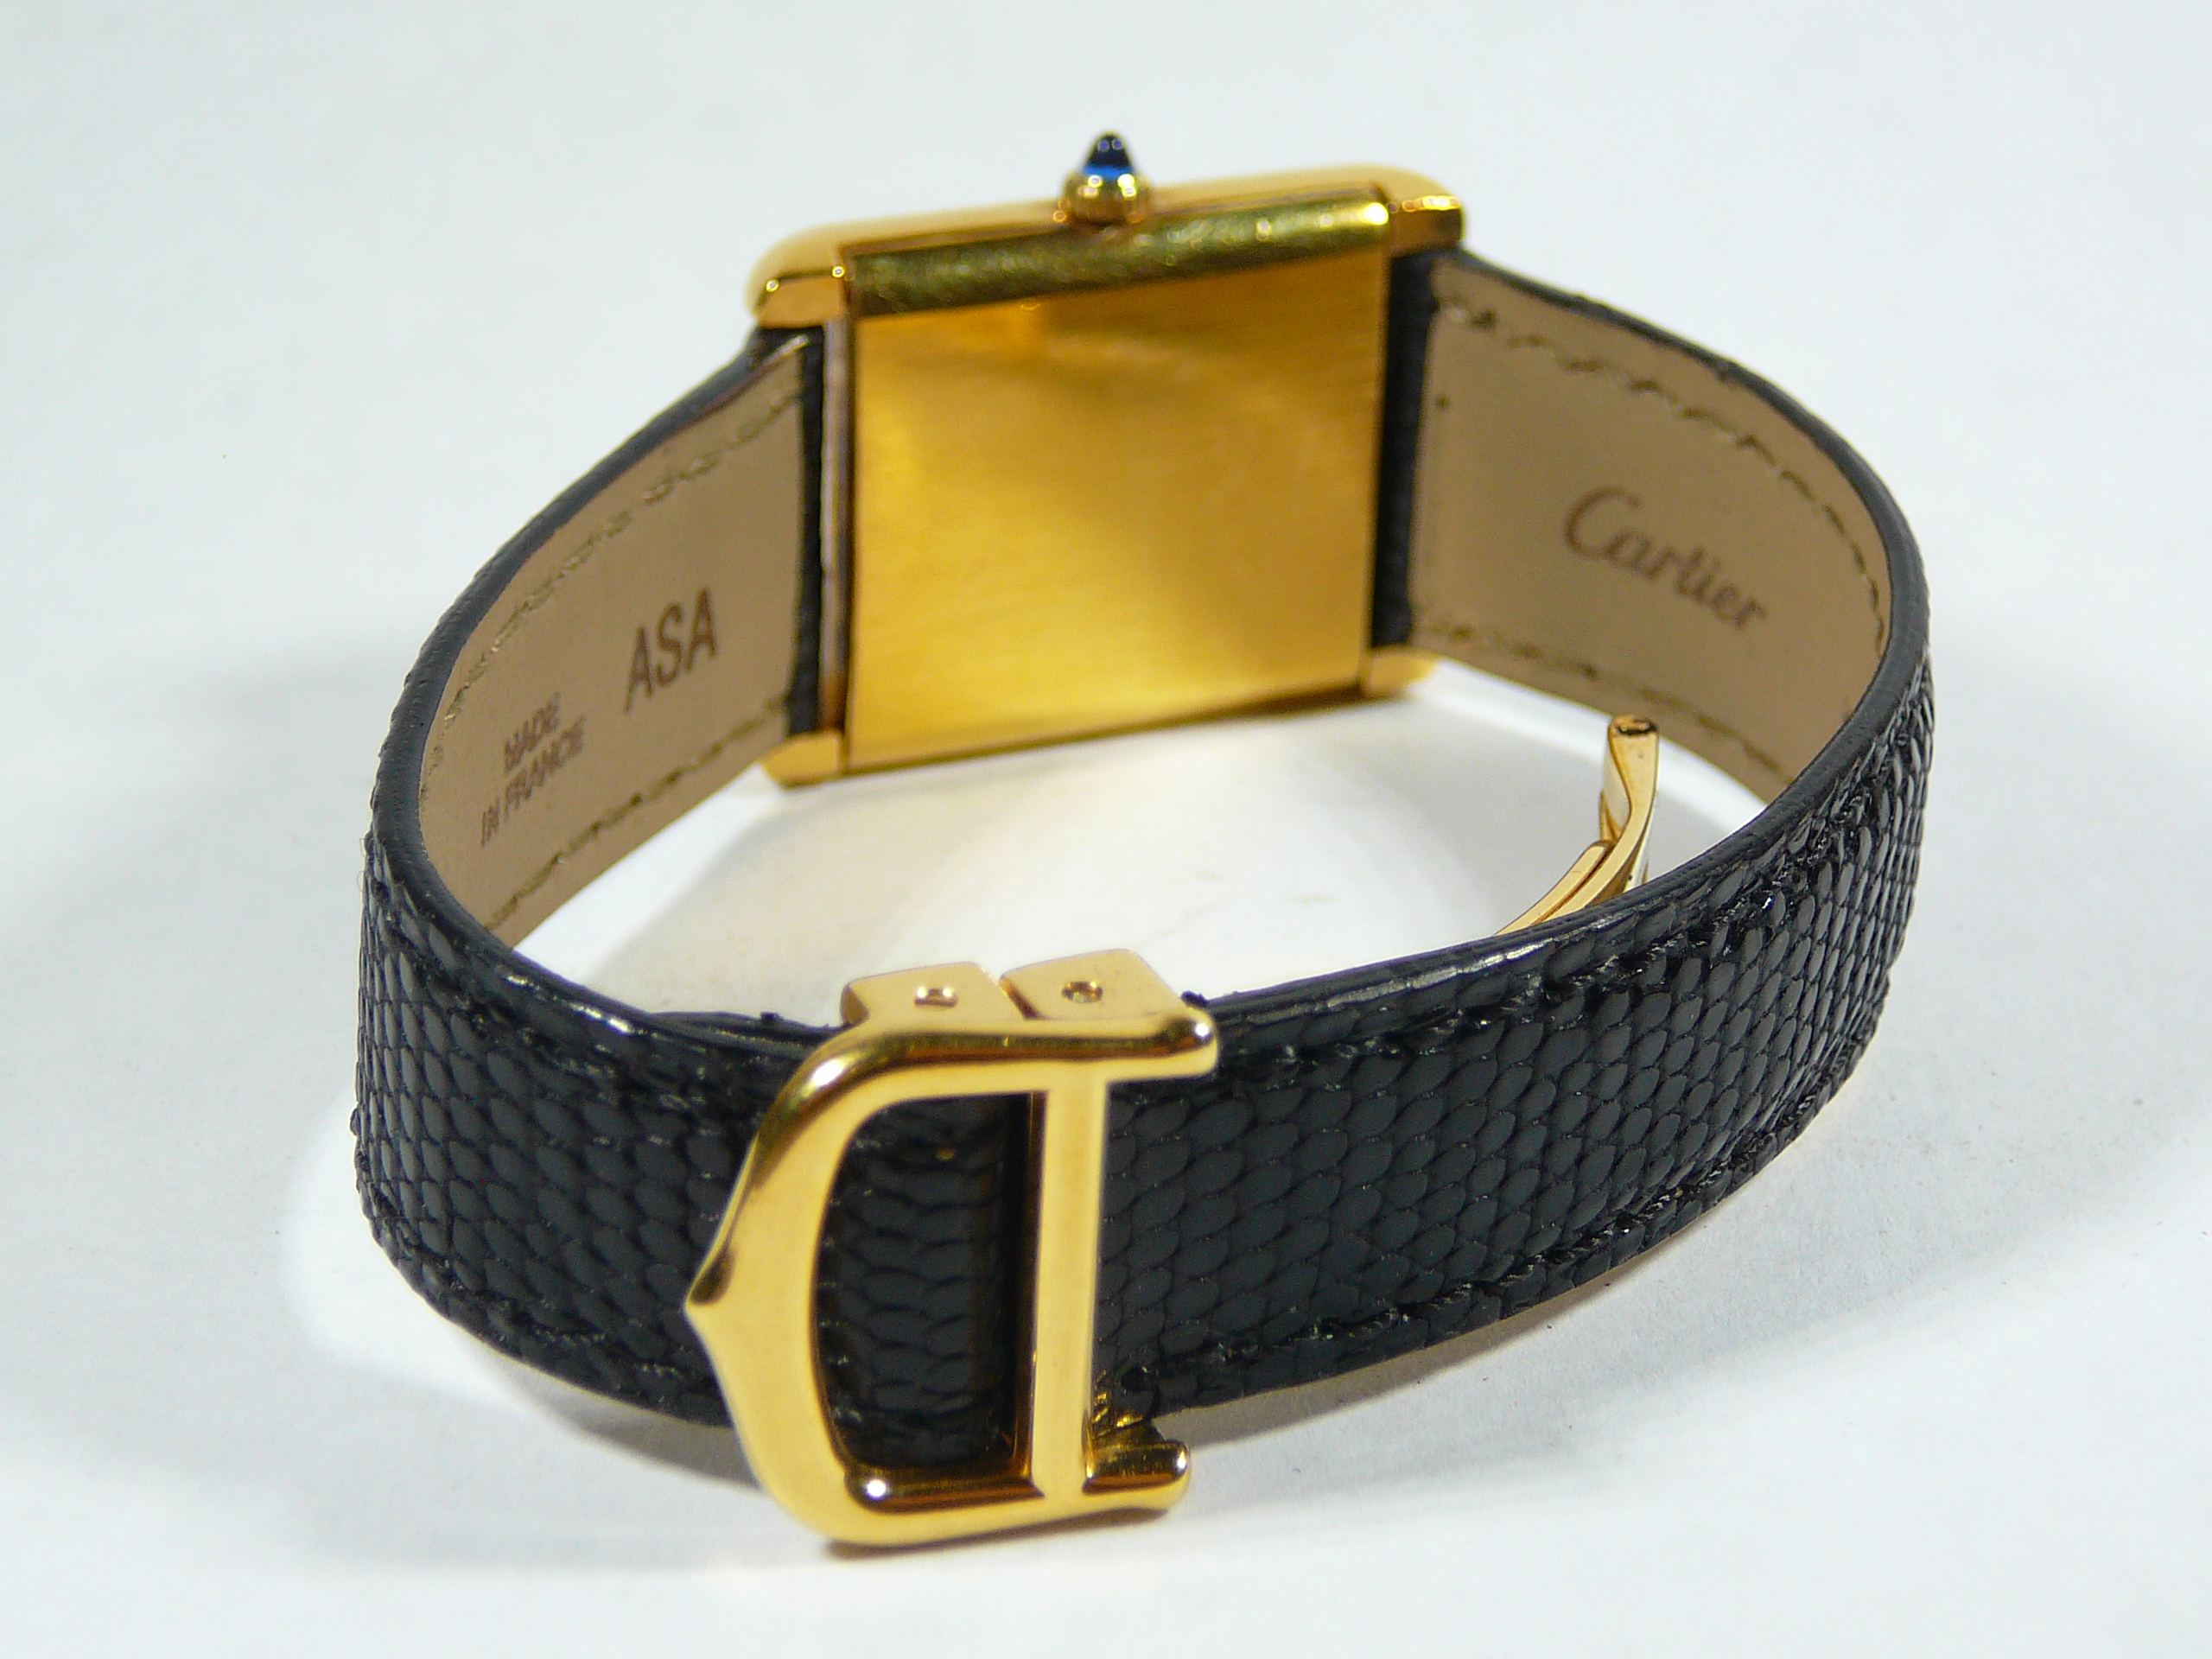 Ladies Cartier Wrist Watch - Image 3 of 3